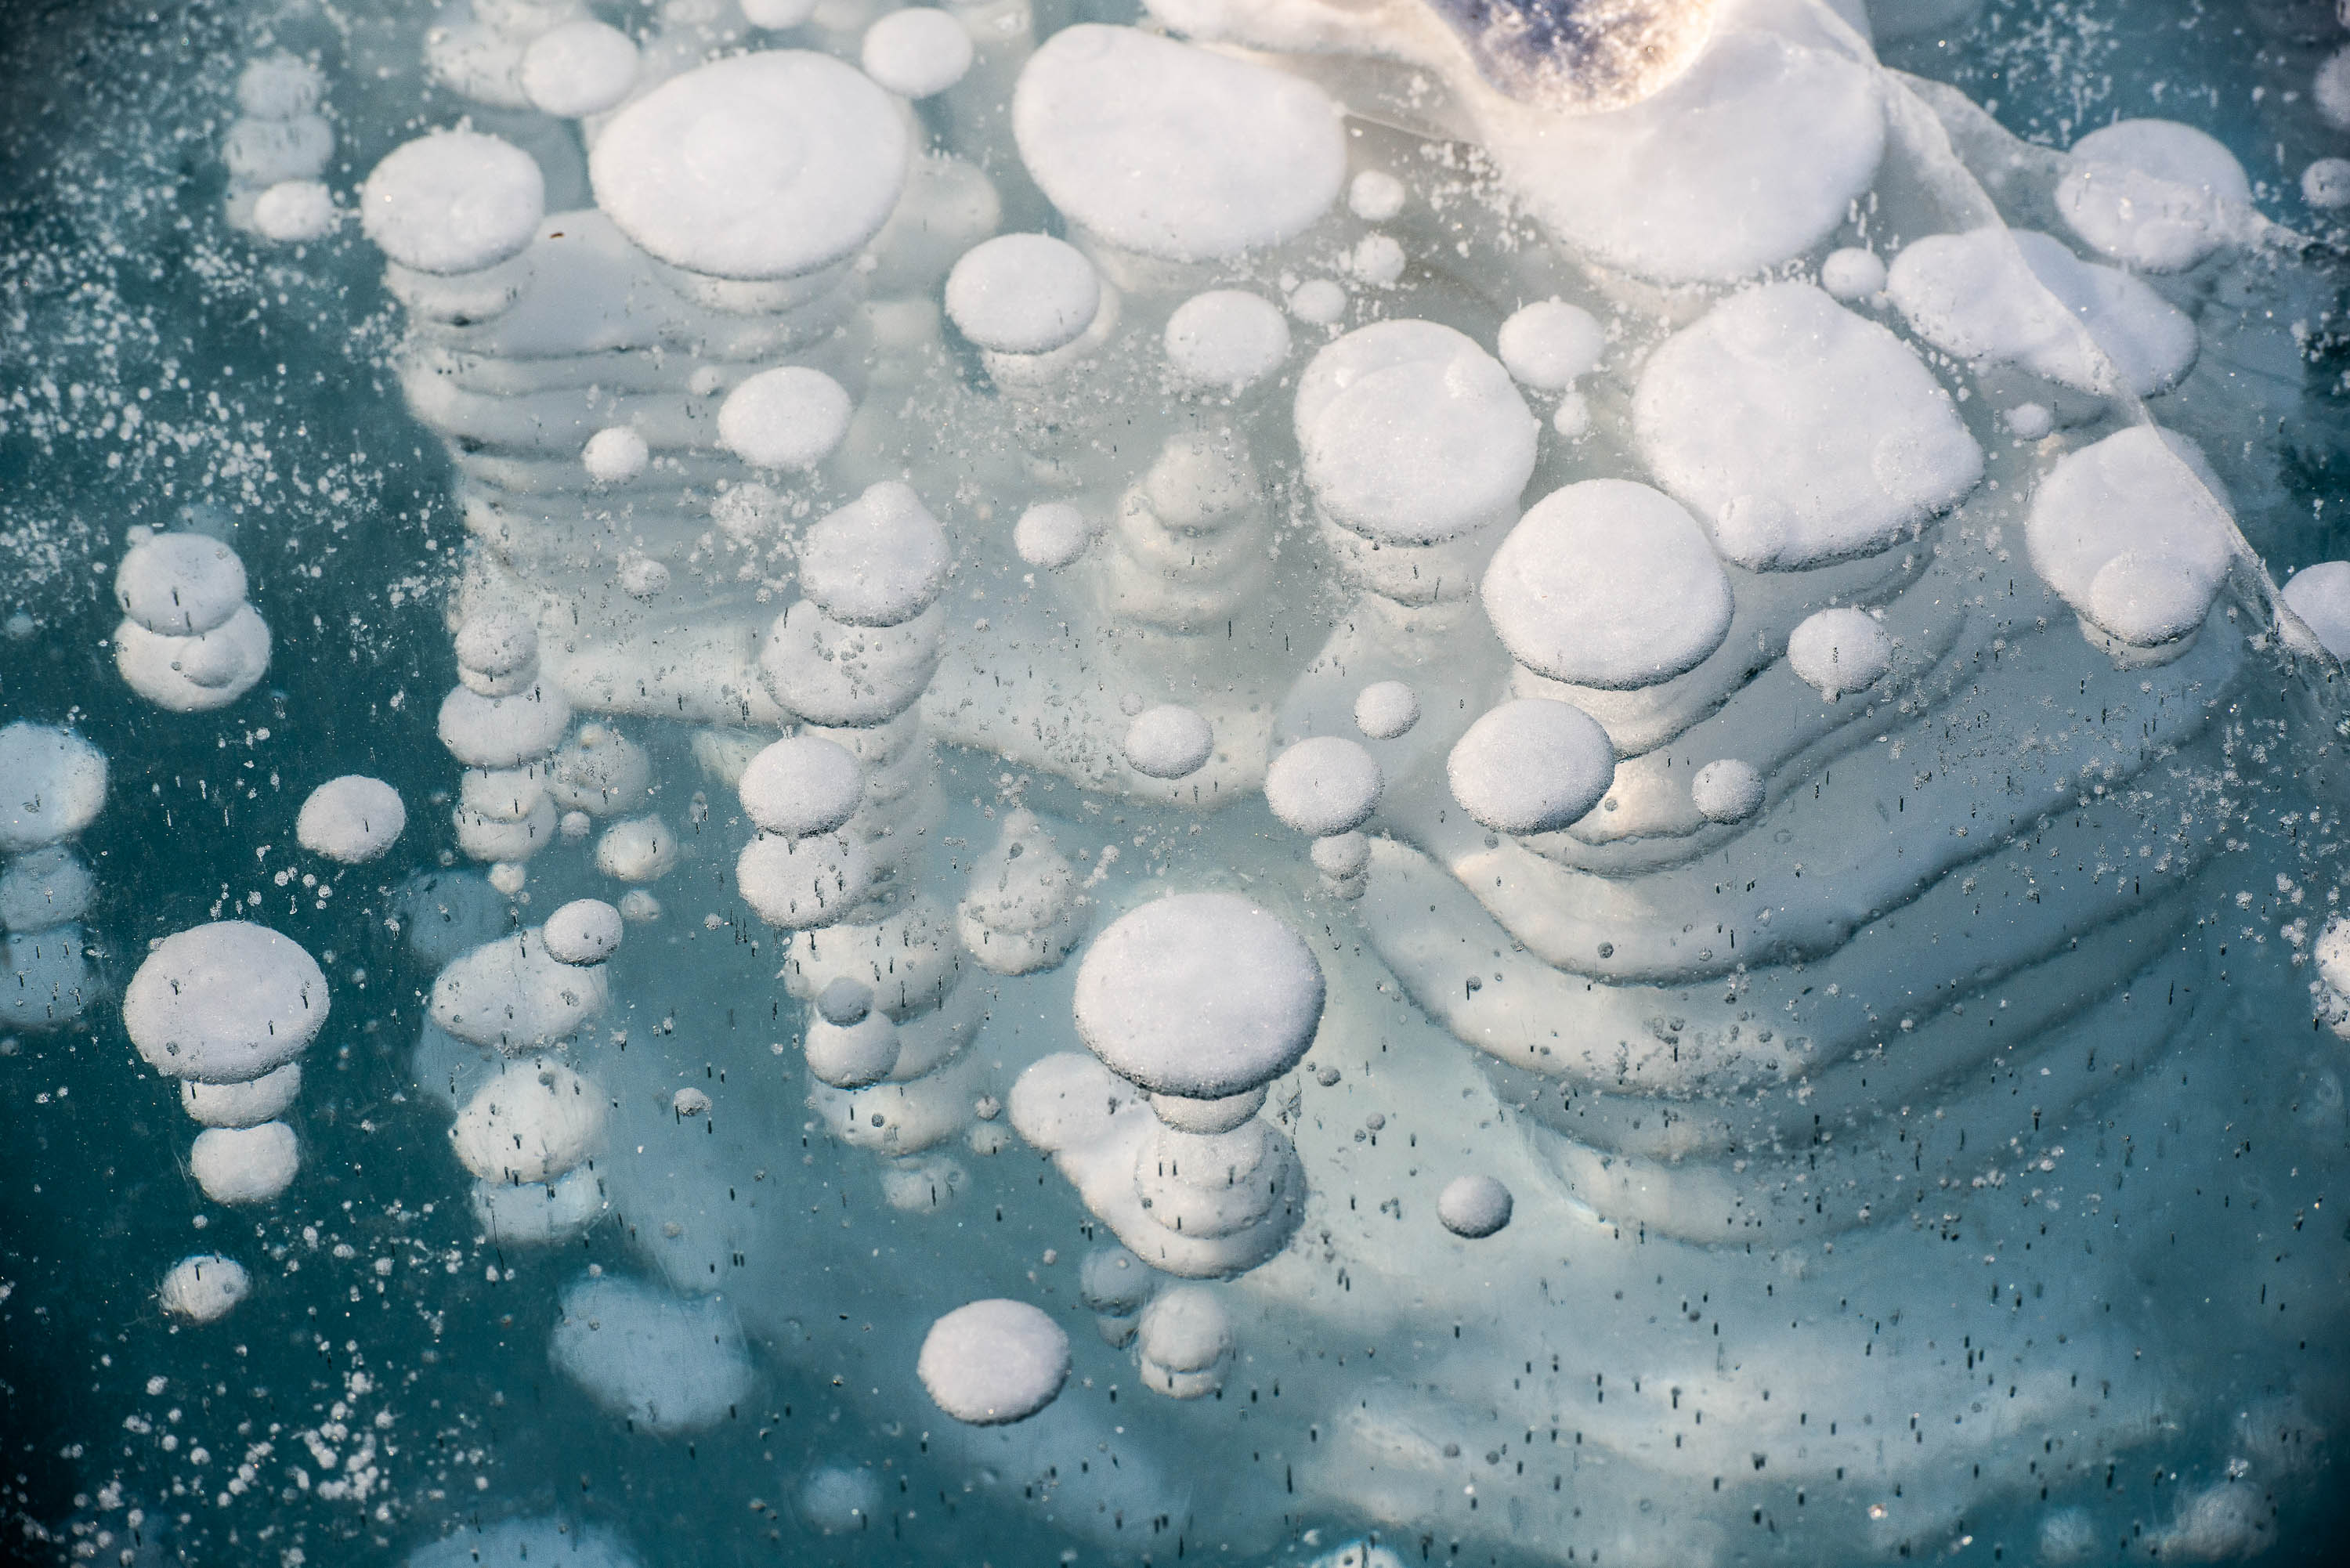 Flat Snowballs floating on the water, Lake Baikal #17, Siberia, Russia